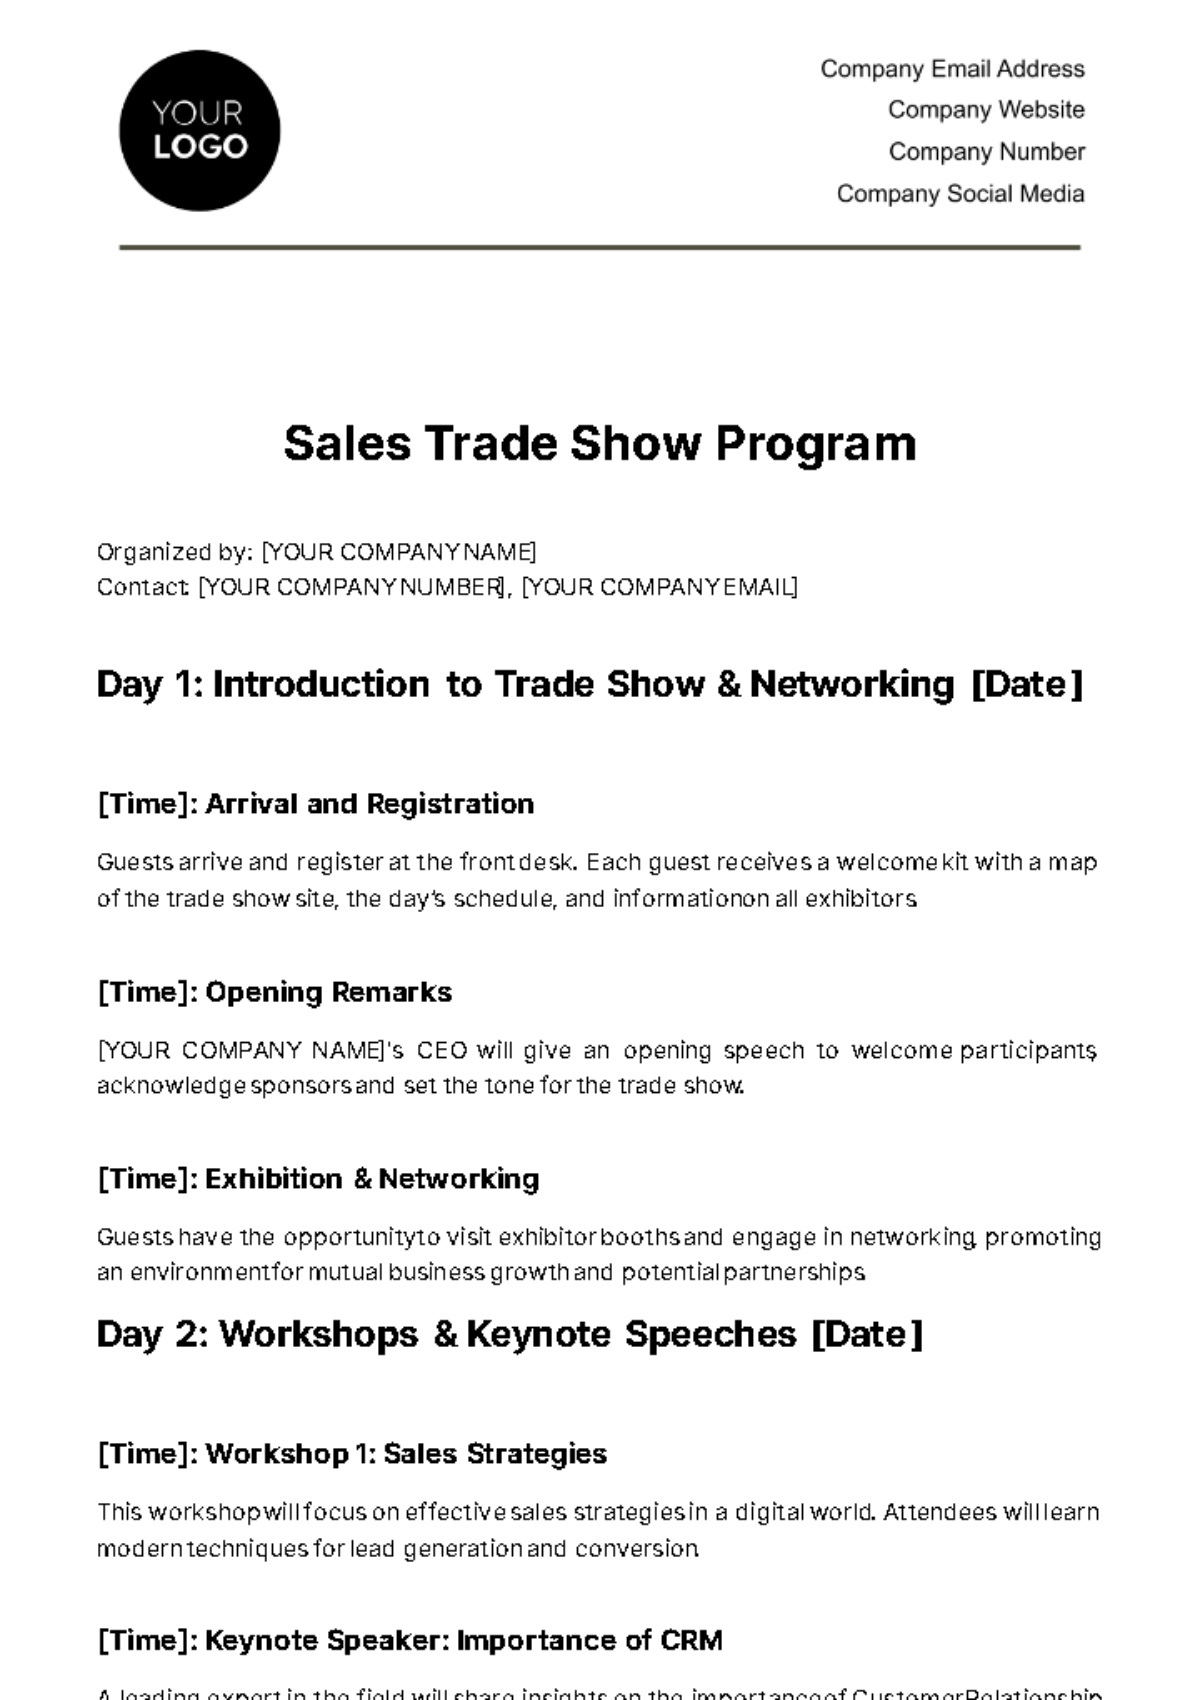 Free Sales Trade Show Program Template